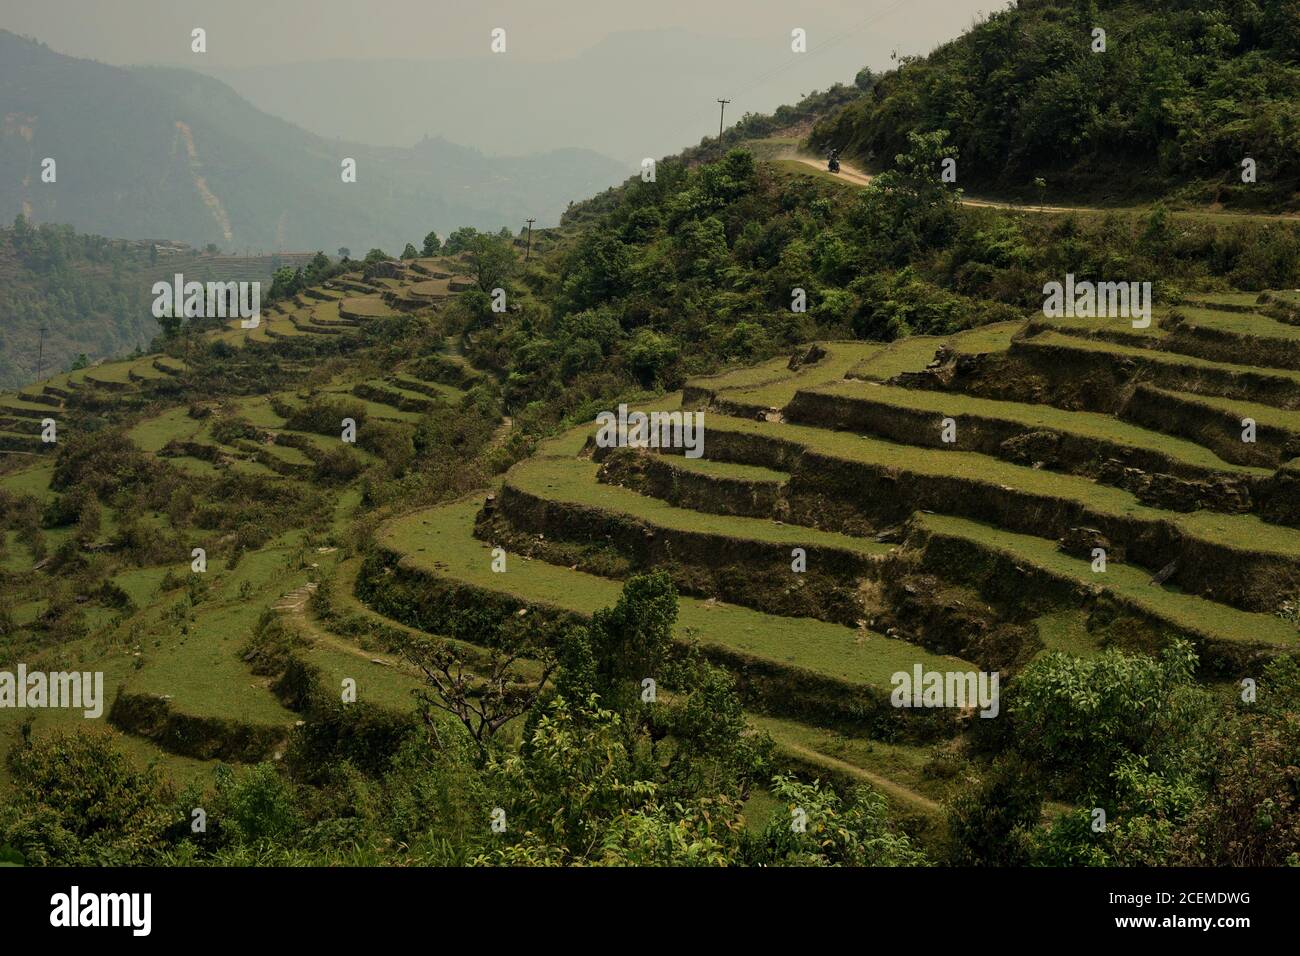 Agricultural terraces and rural road in Sidhane village on Panchase mountain region, Gandaki Pradesh, Nepal. Stock Photo